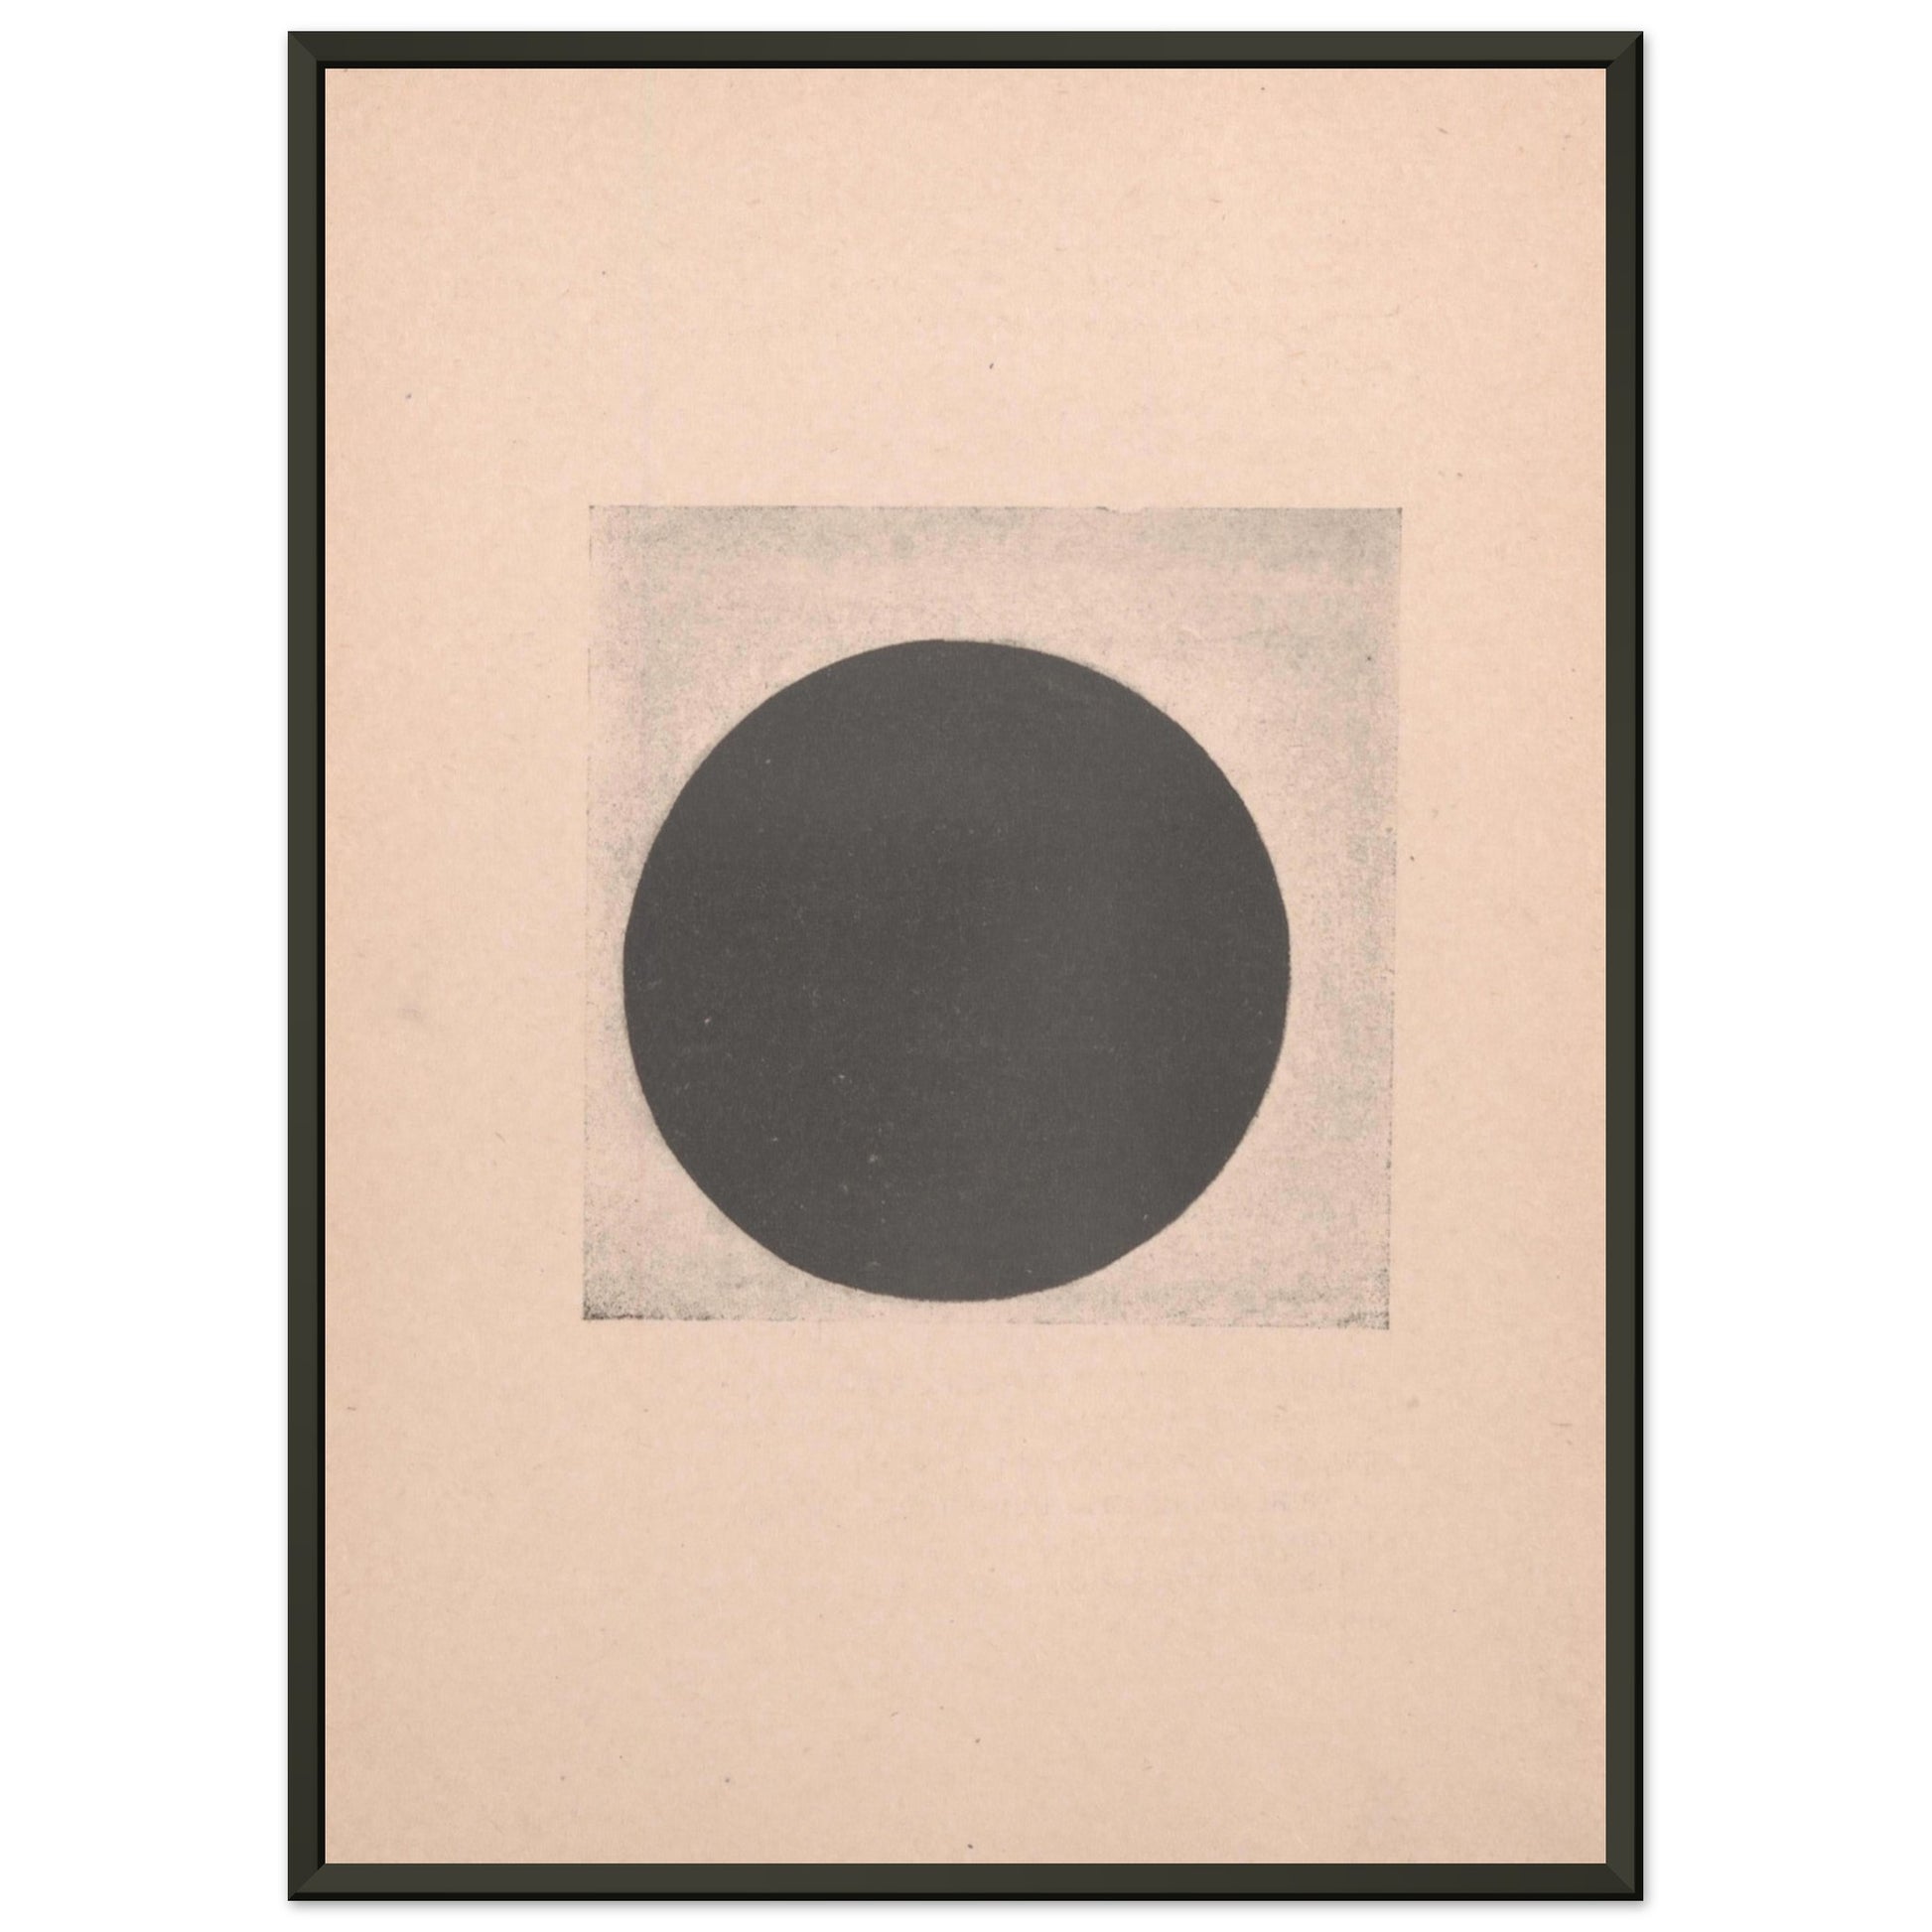 KAZIMIR MALEVICH - BLACK CIRCLE (1916)